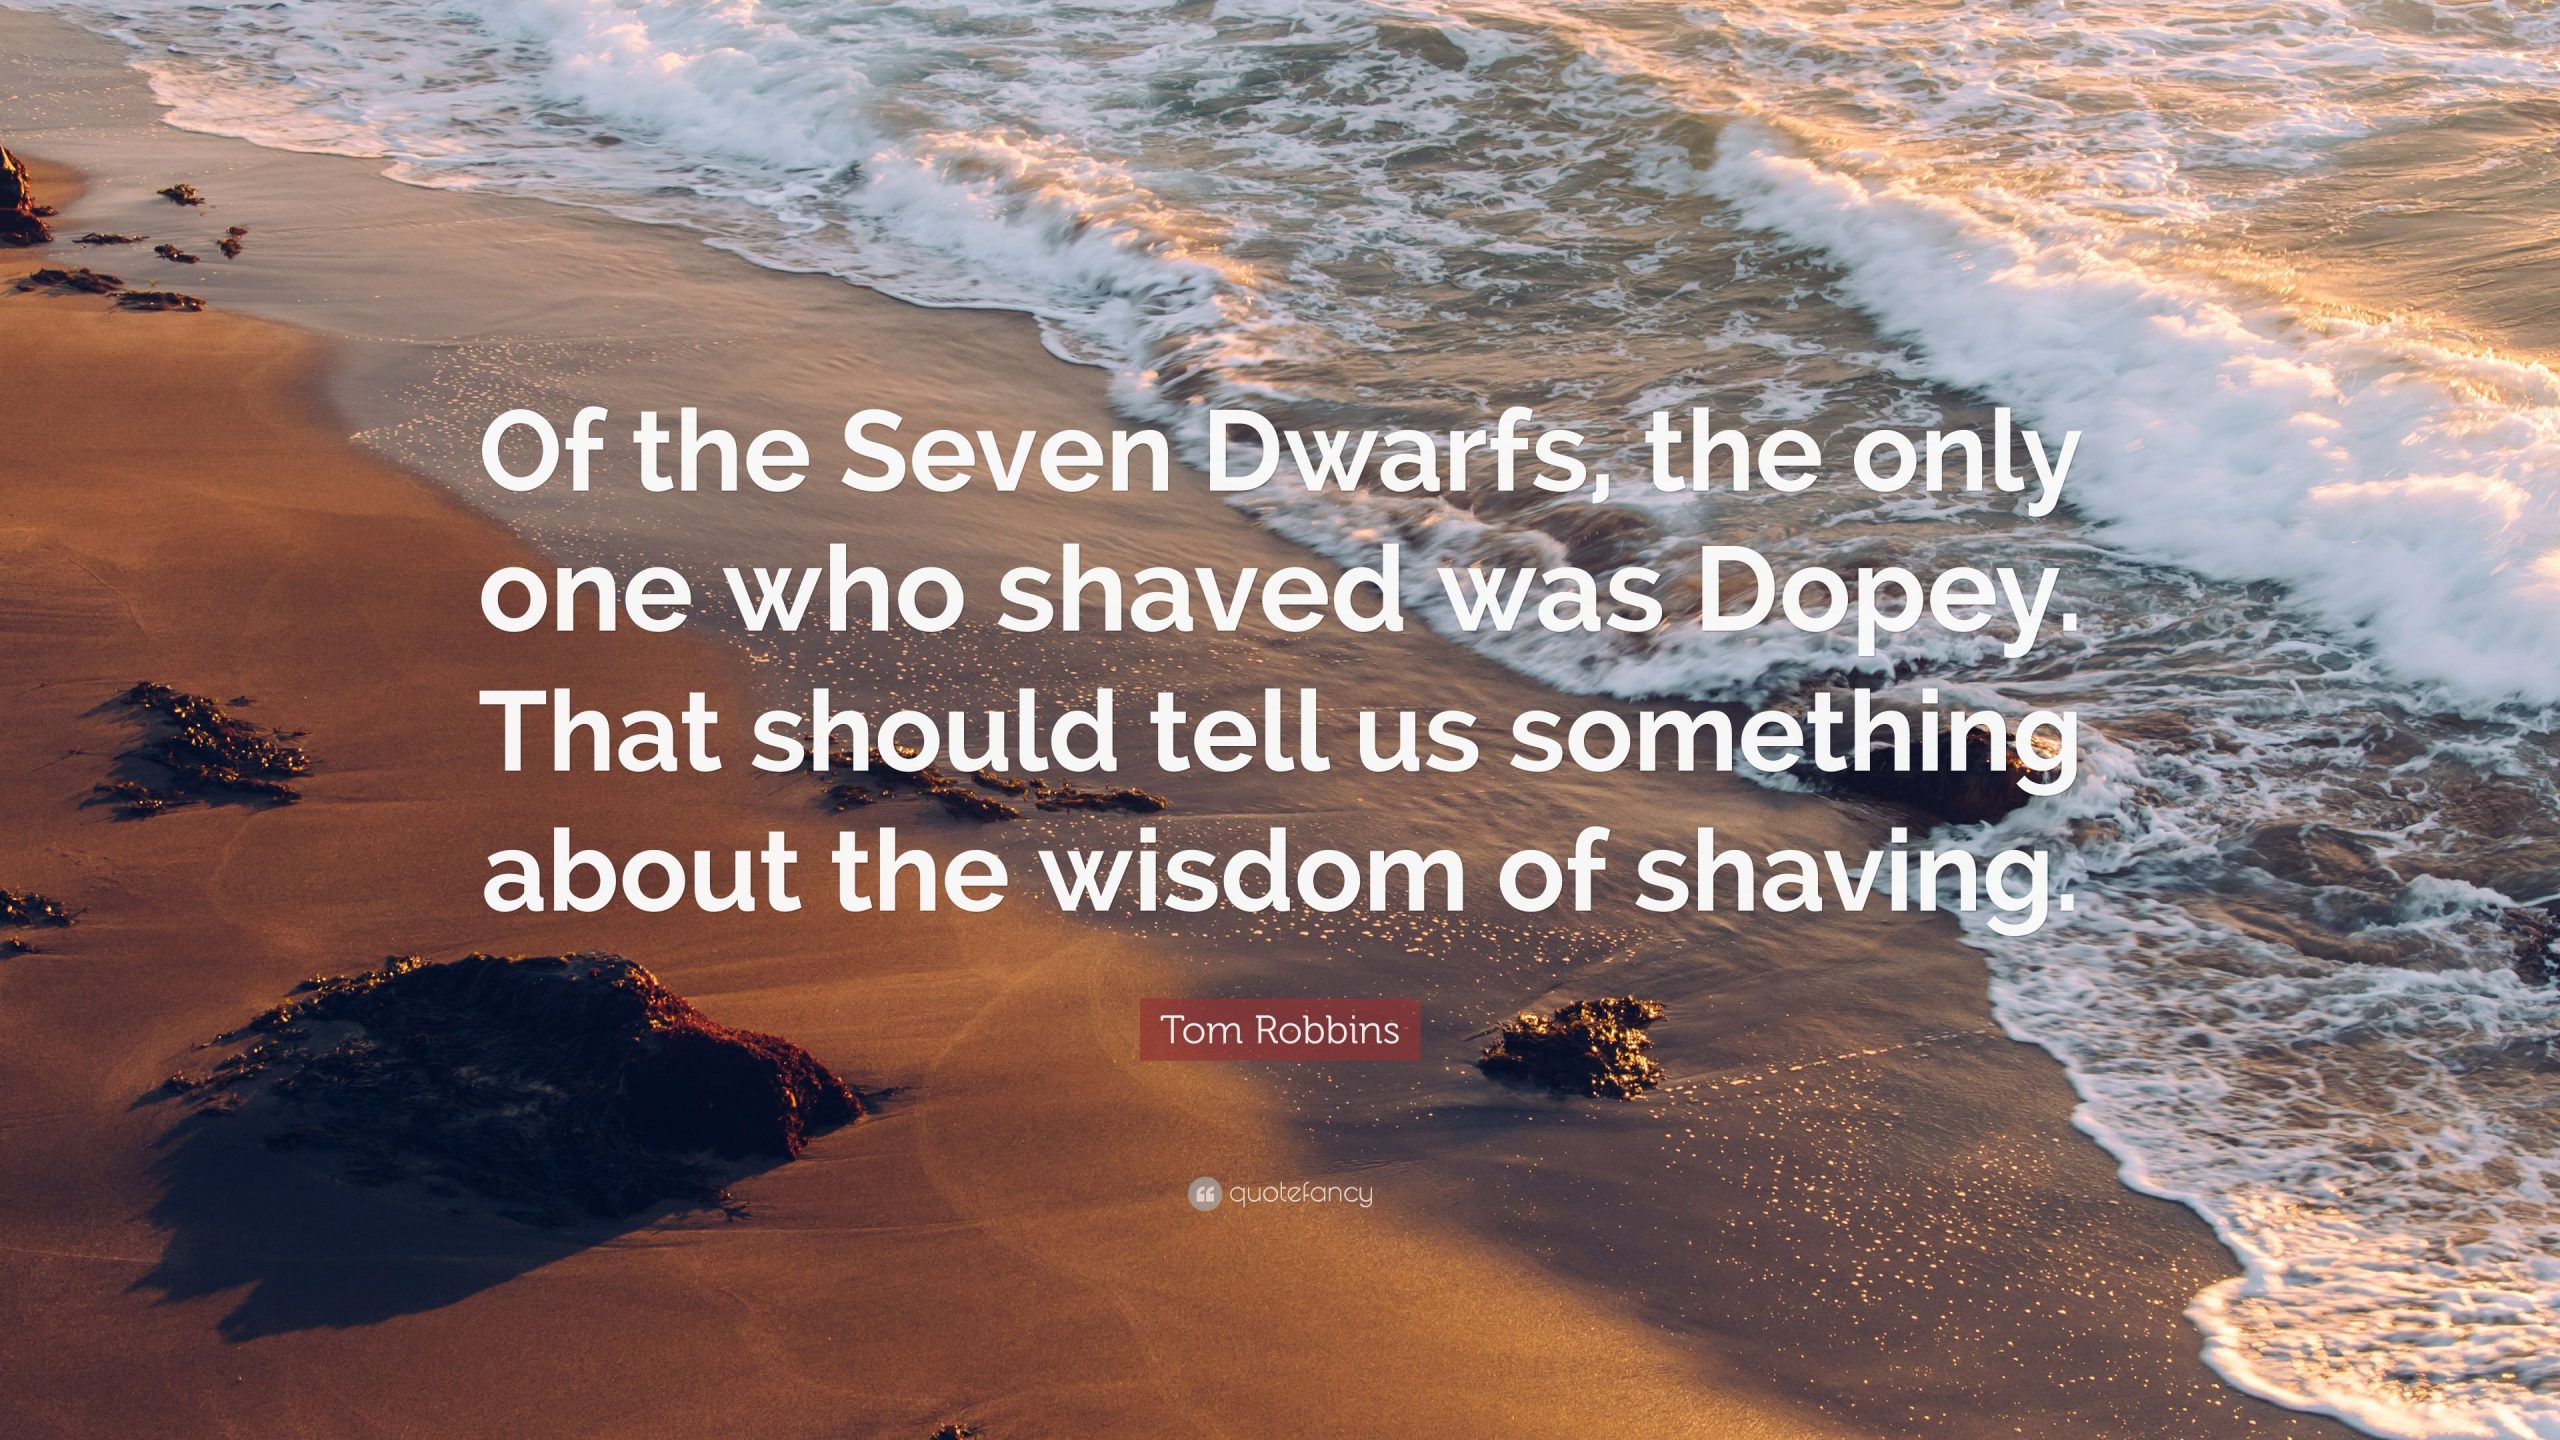 The wisdom of shaving